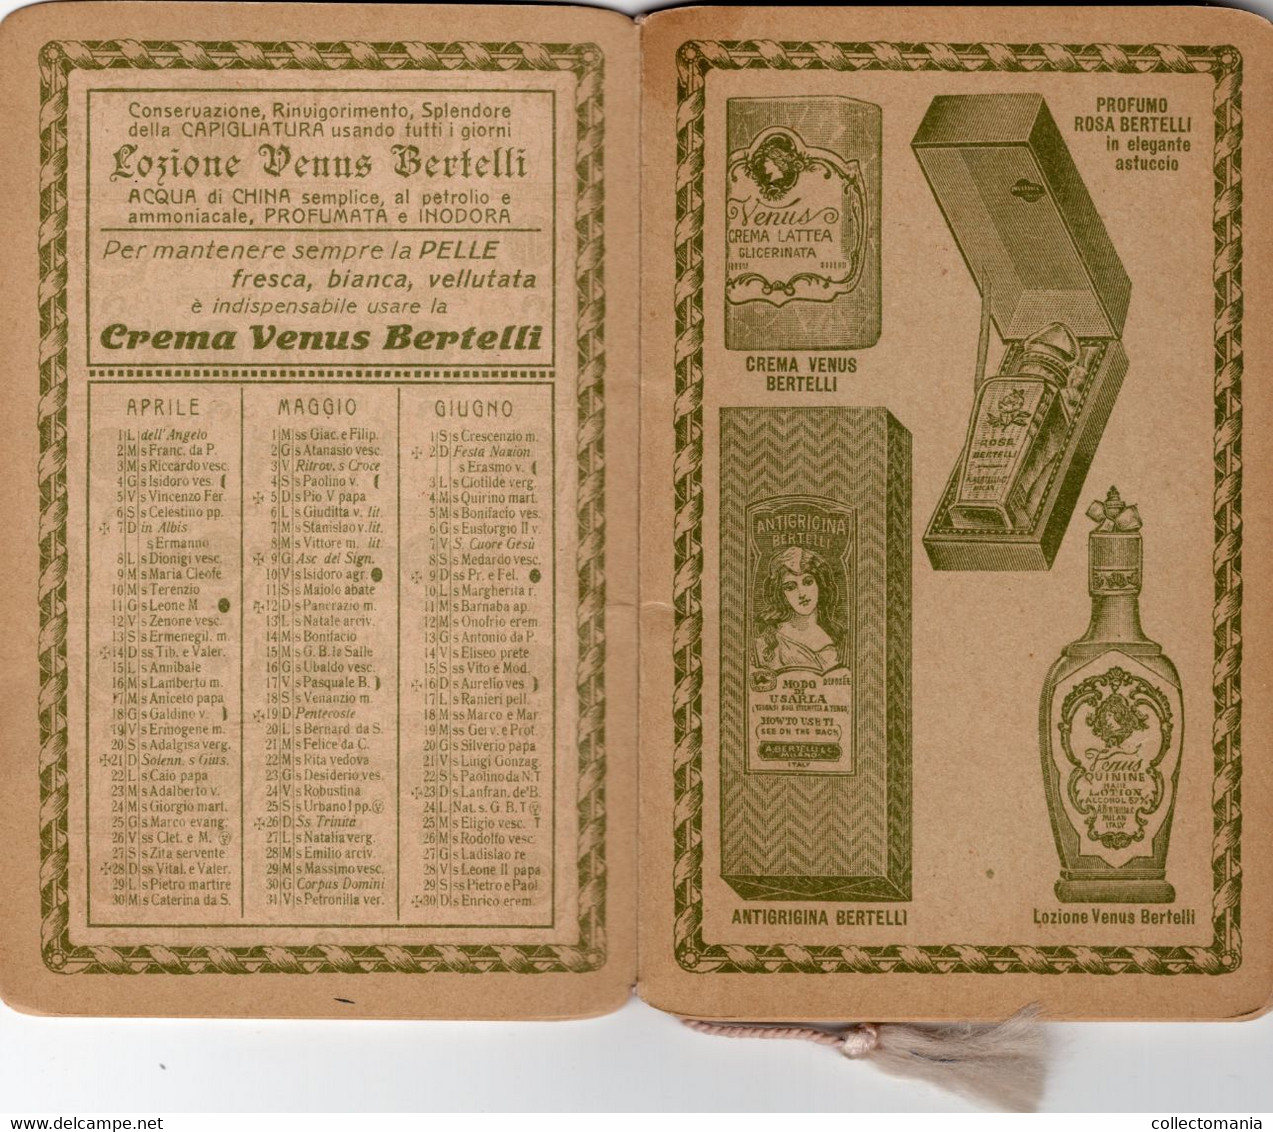 1 Carnet  Booklet  PARFUM Bertilli  Calendrier Almanacco 1918  Al Profumo Rosa  Bertelli - Unclassified